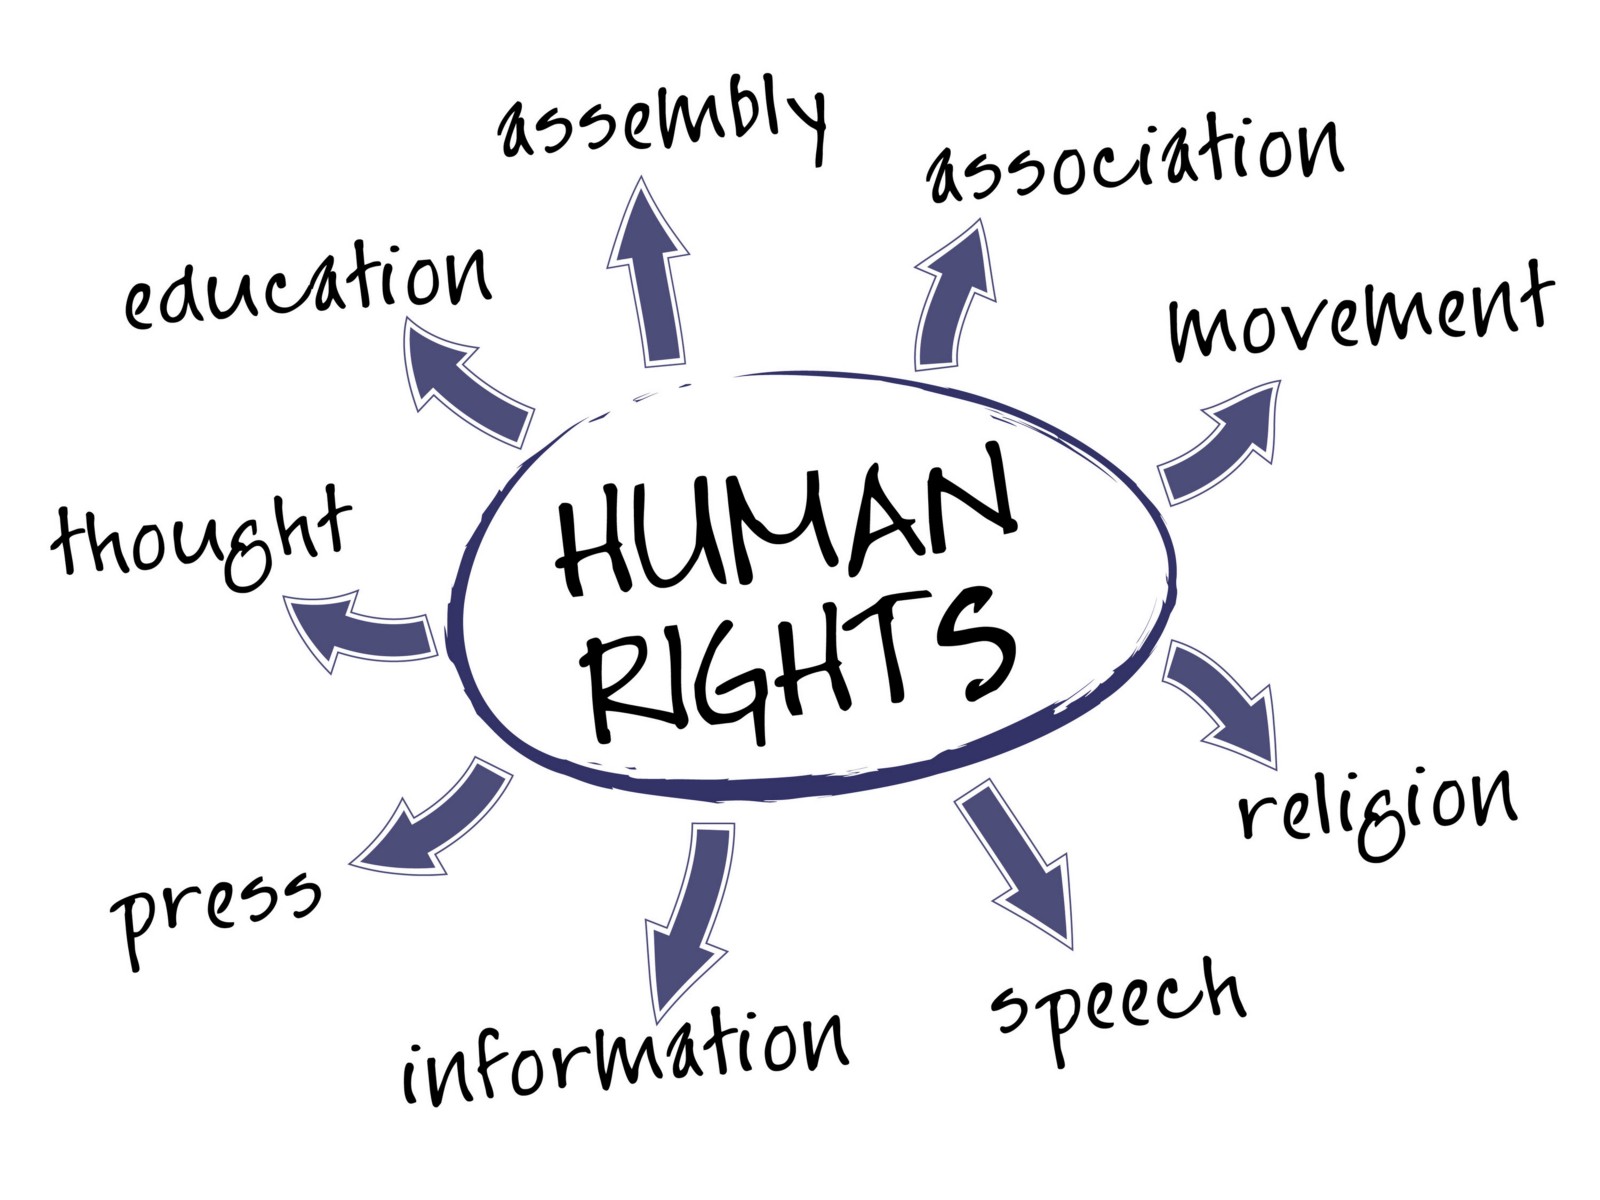 Human rights photo